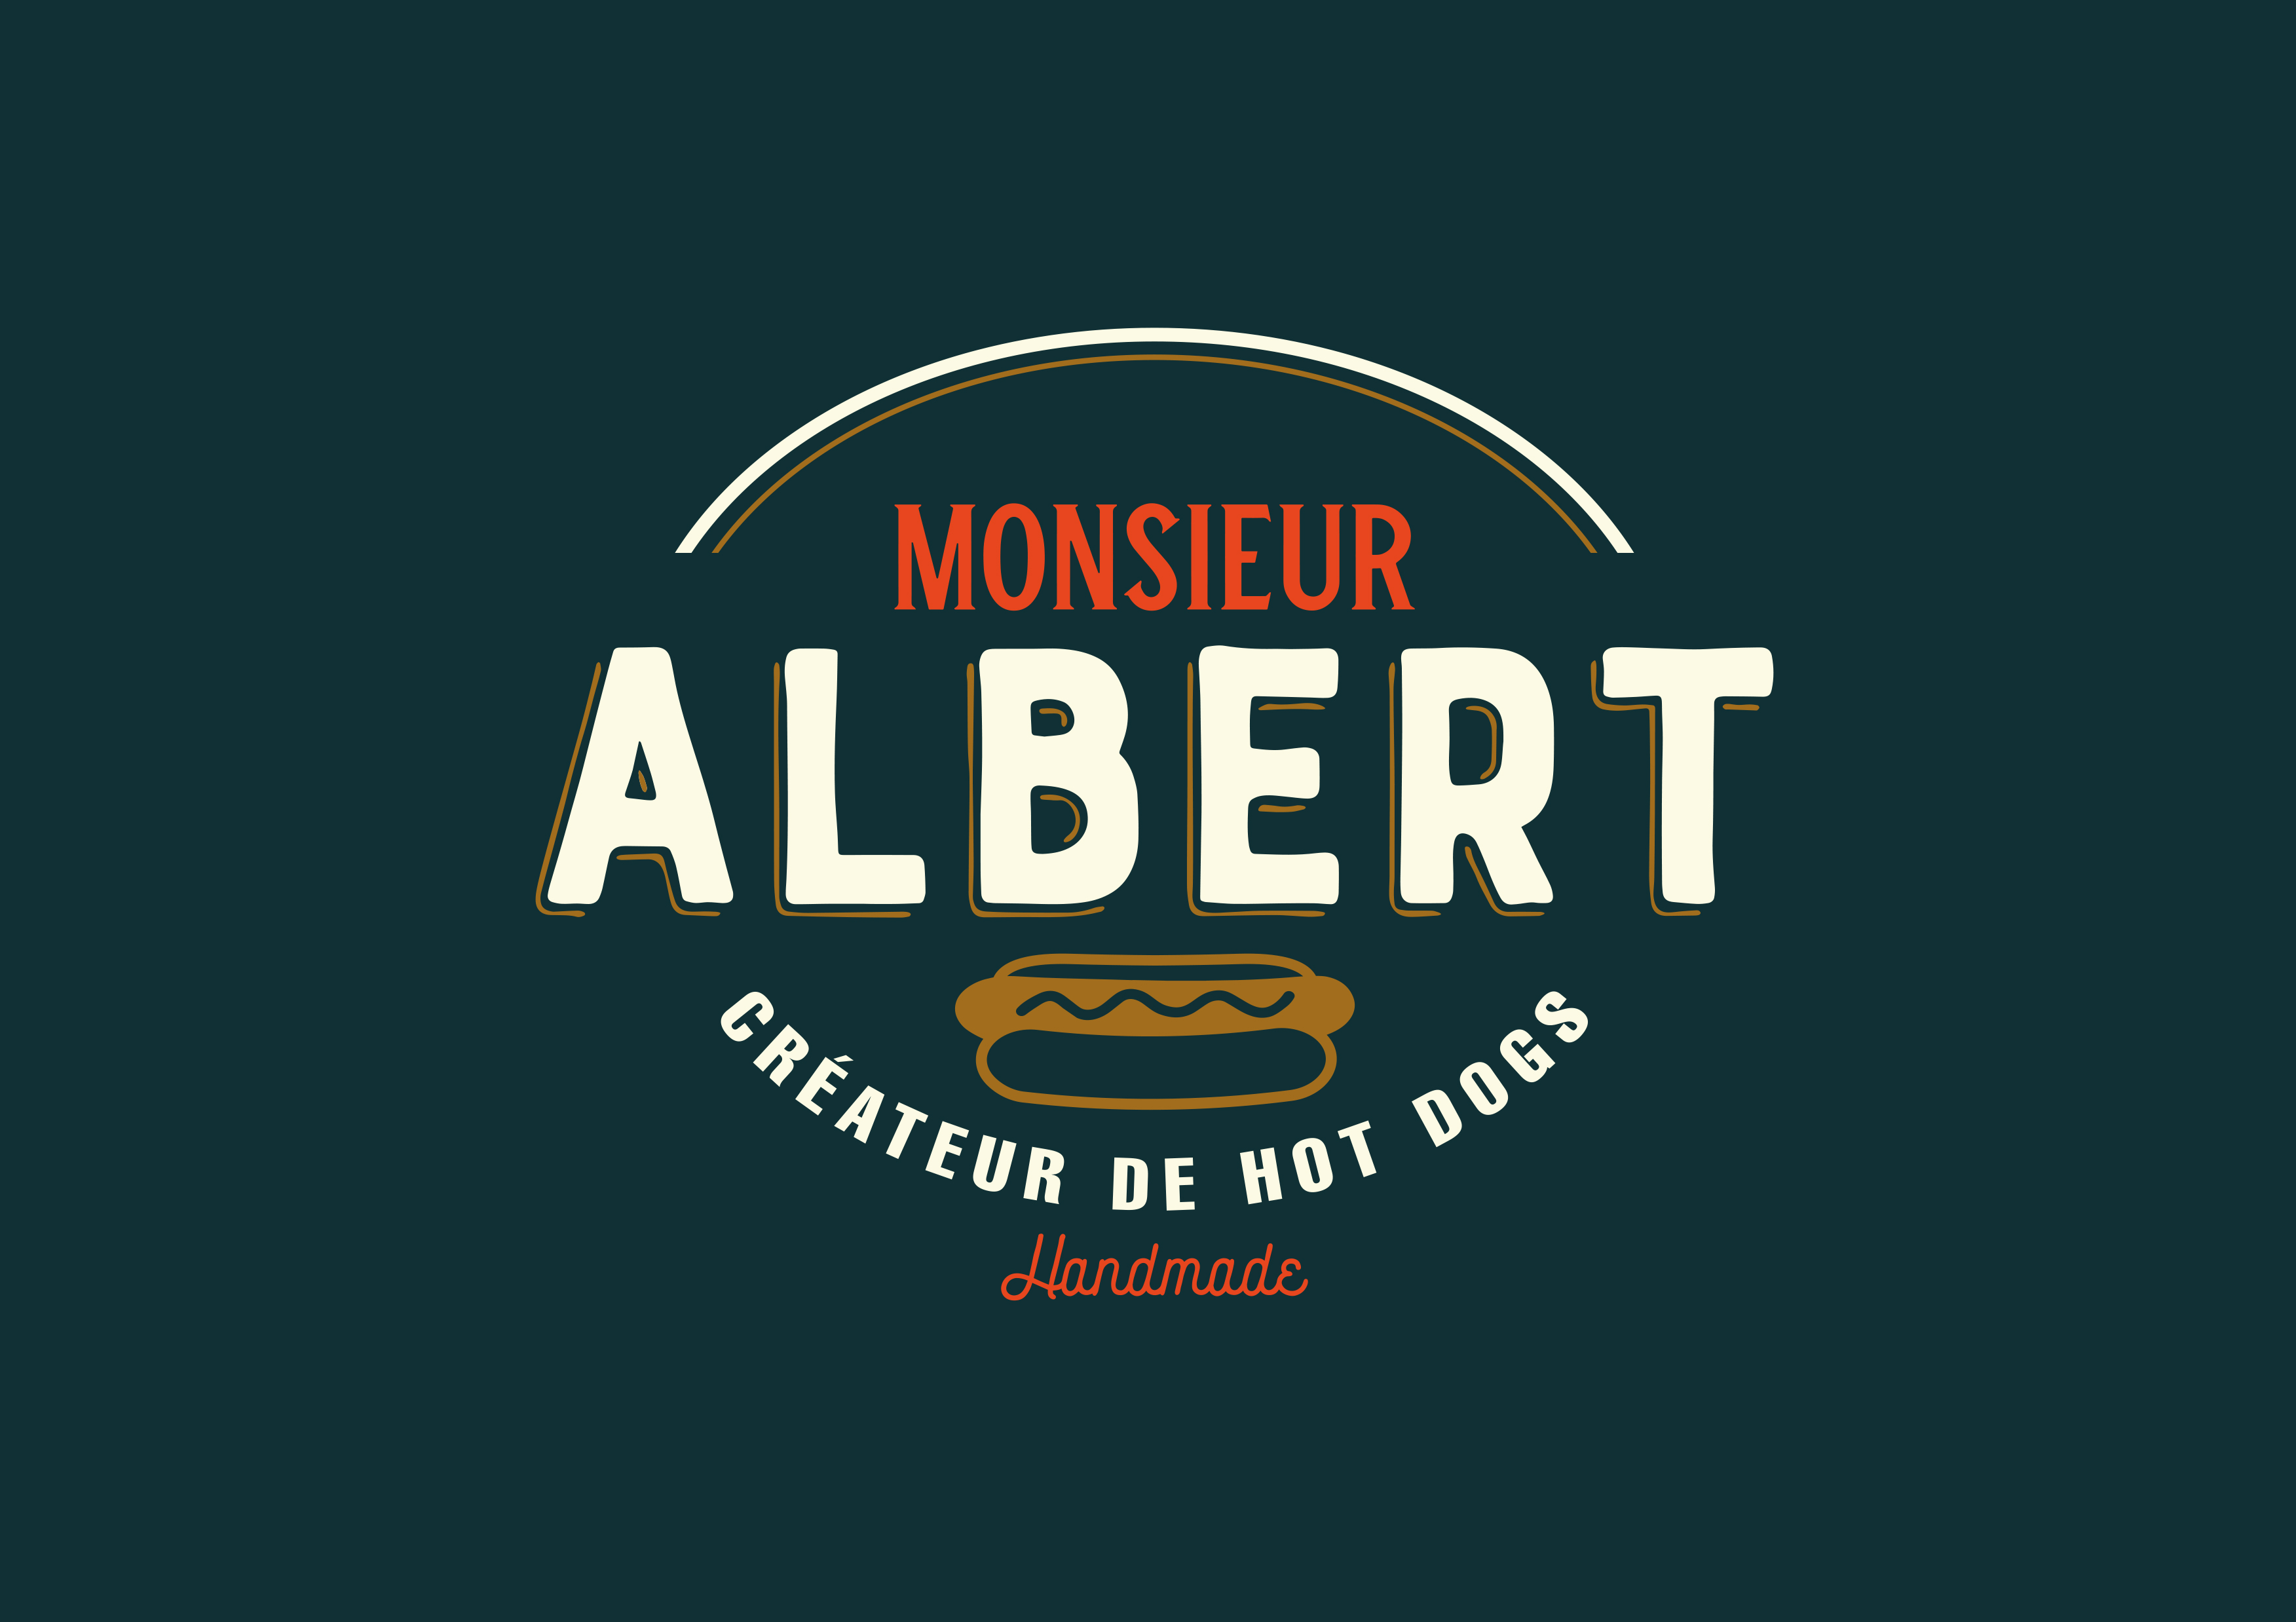 Monsieur Albert